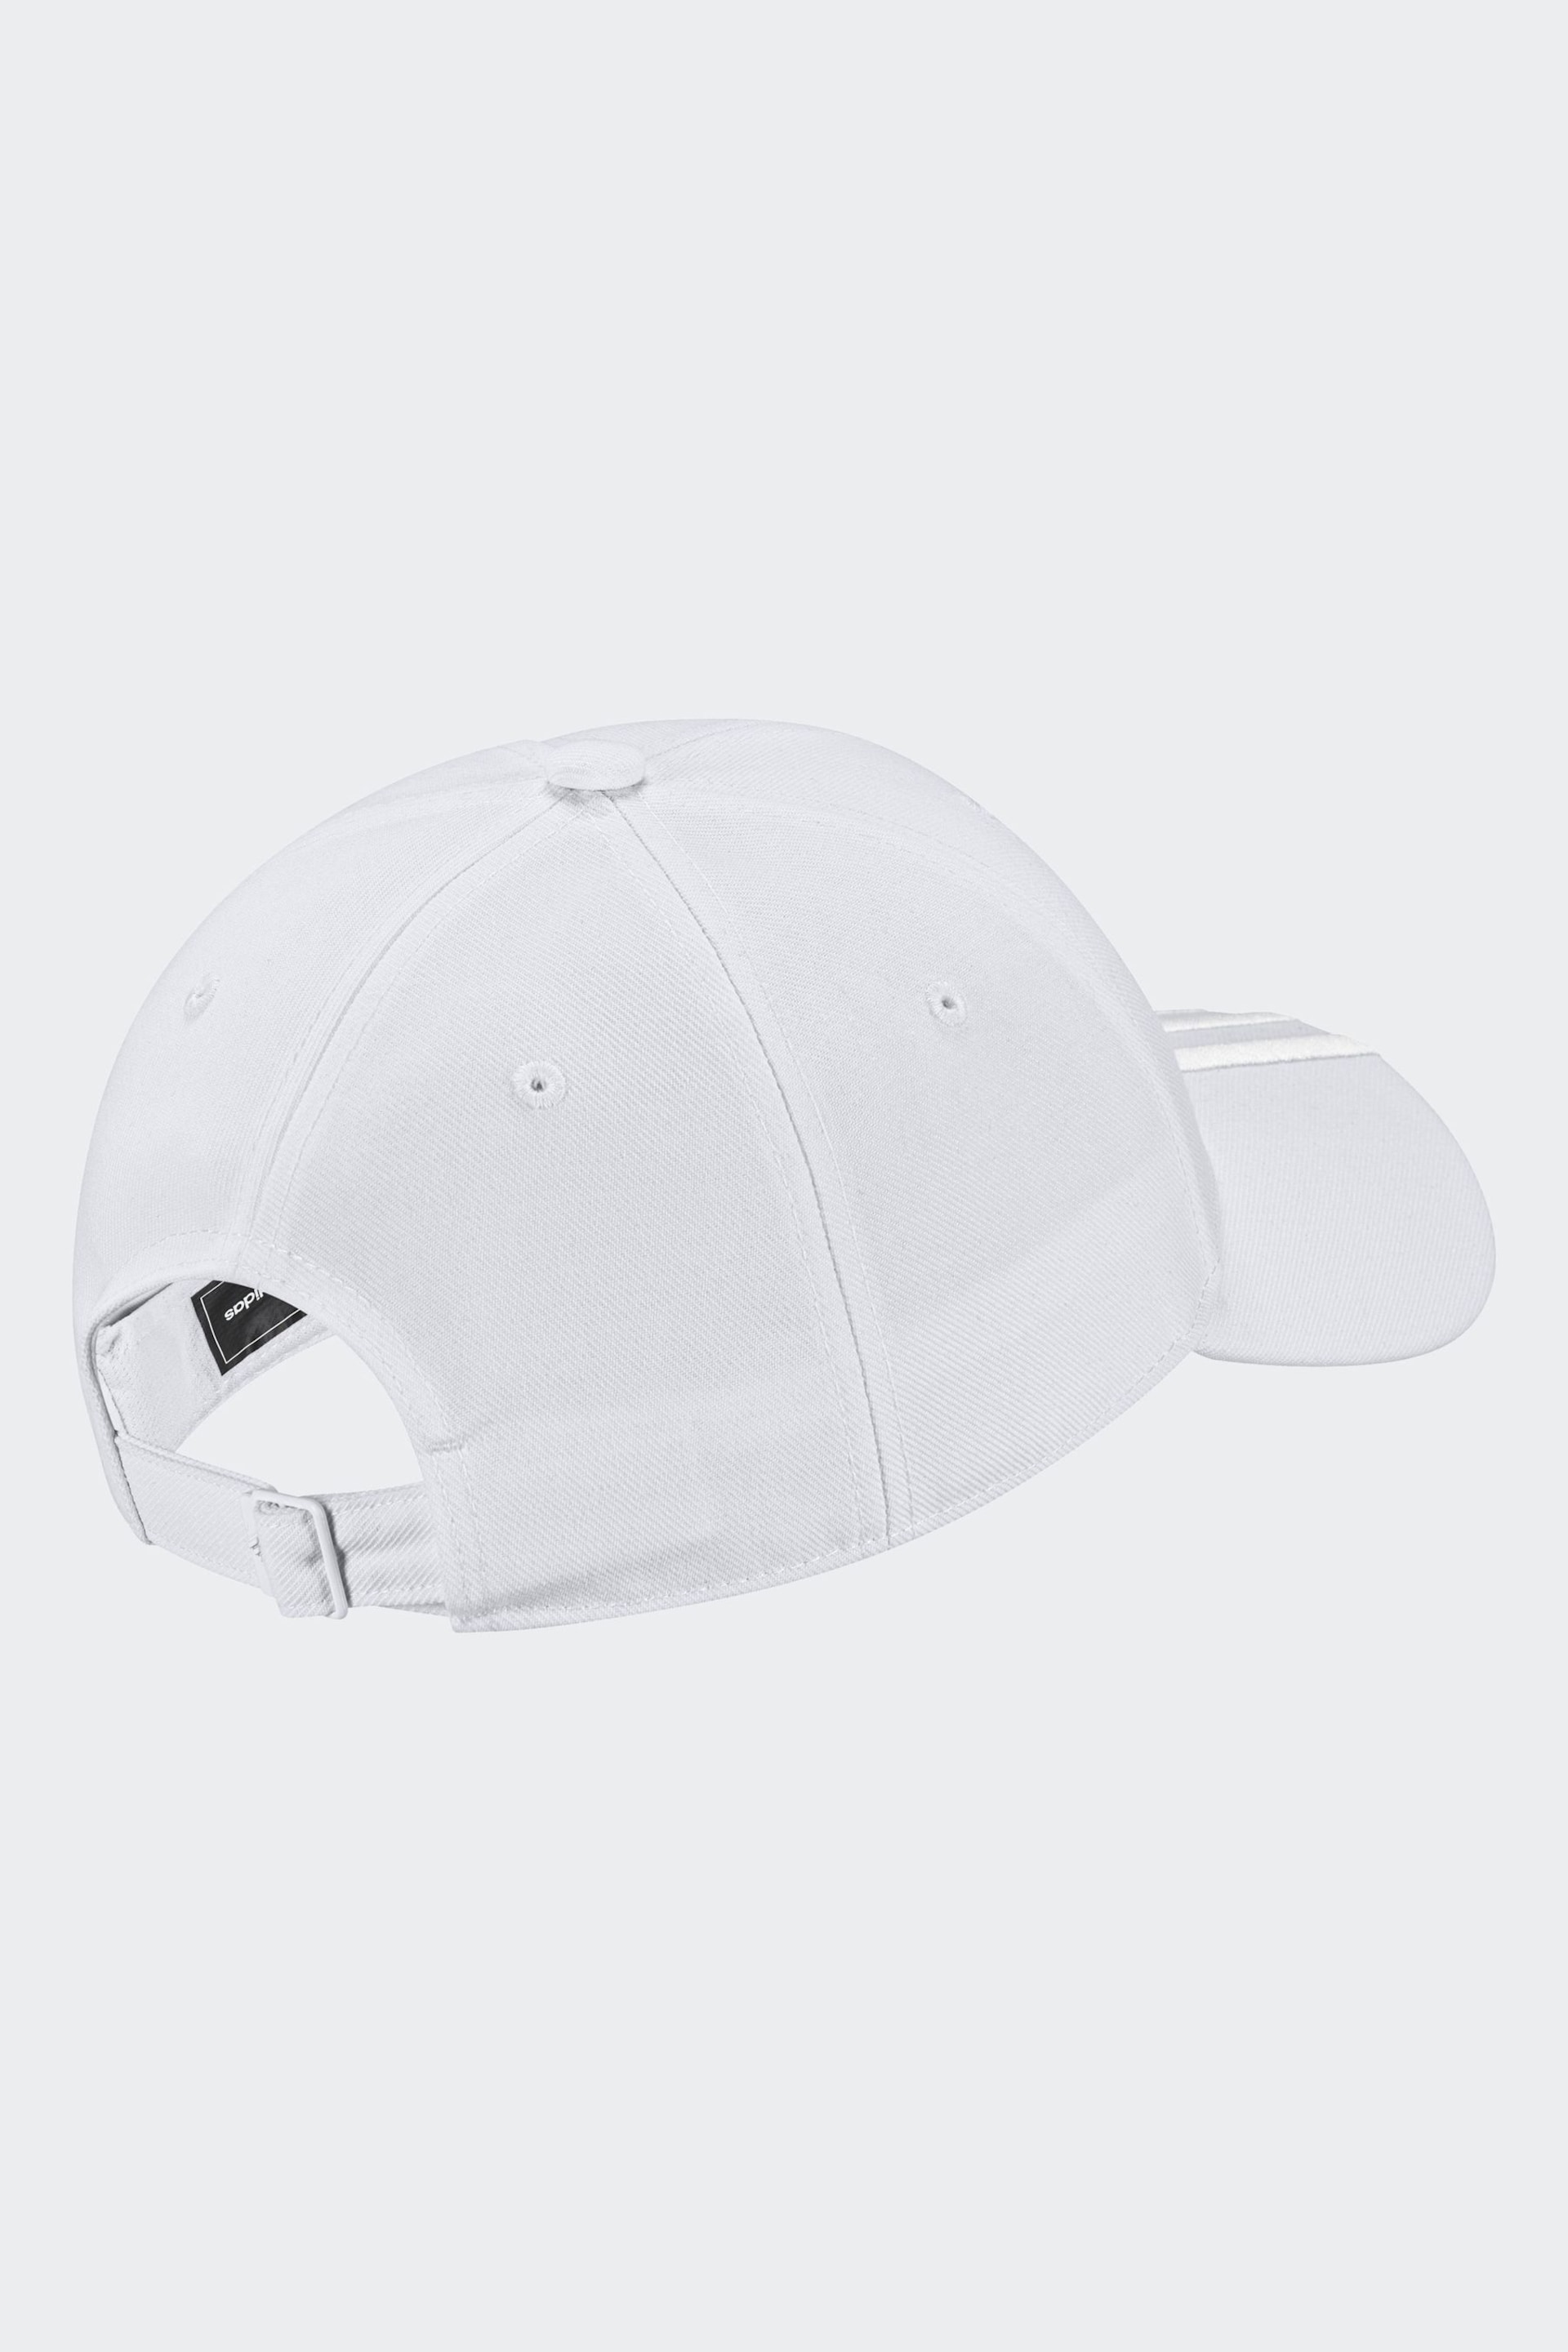 adidas White Performance Cap - Image 2 of 2